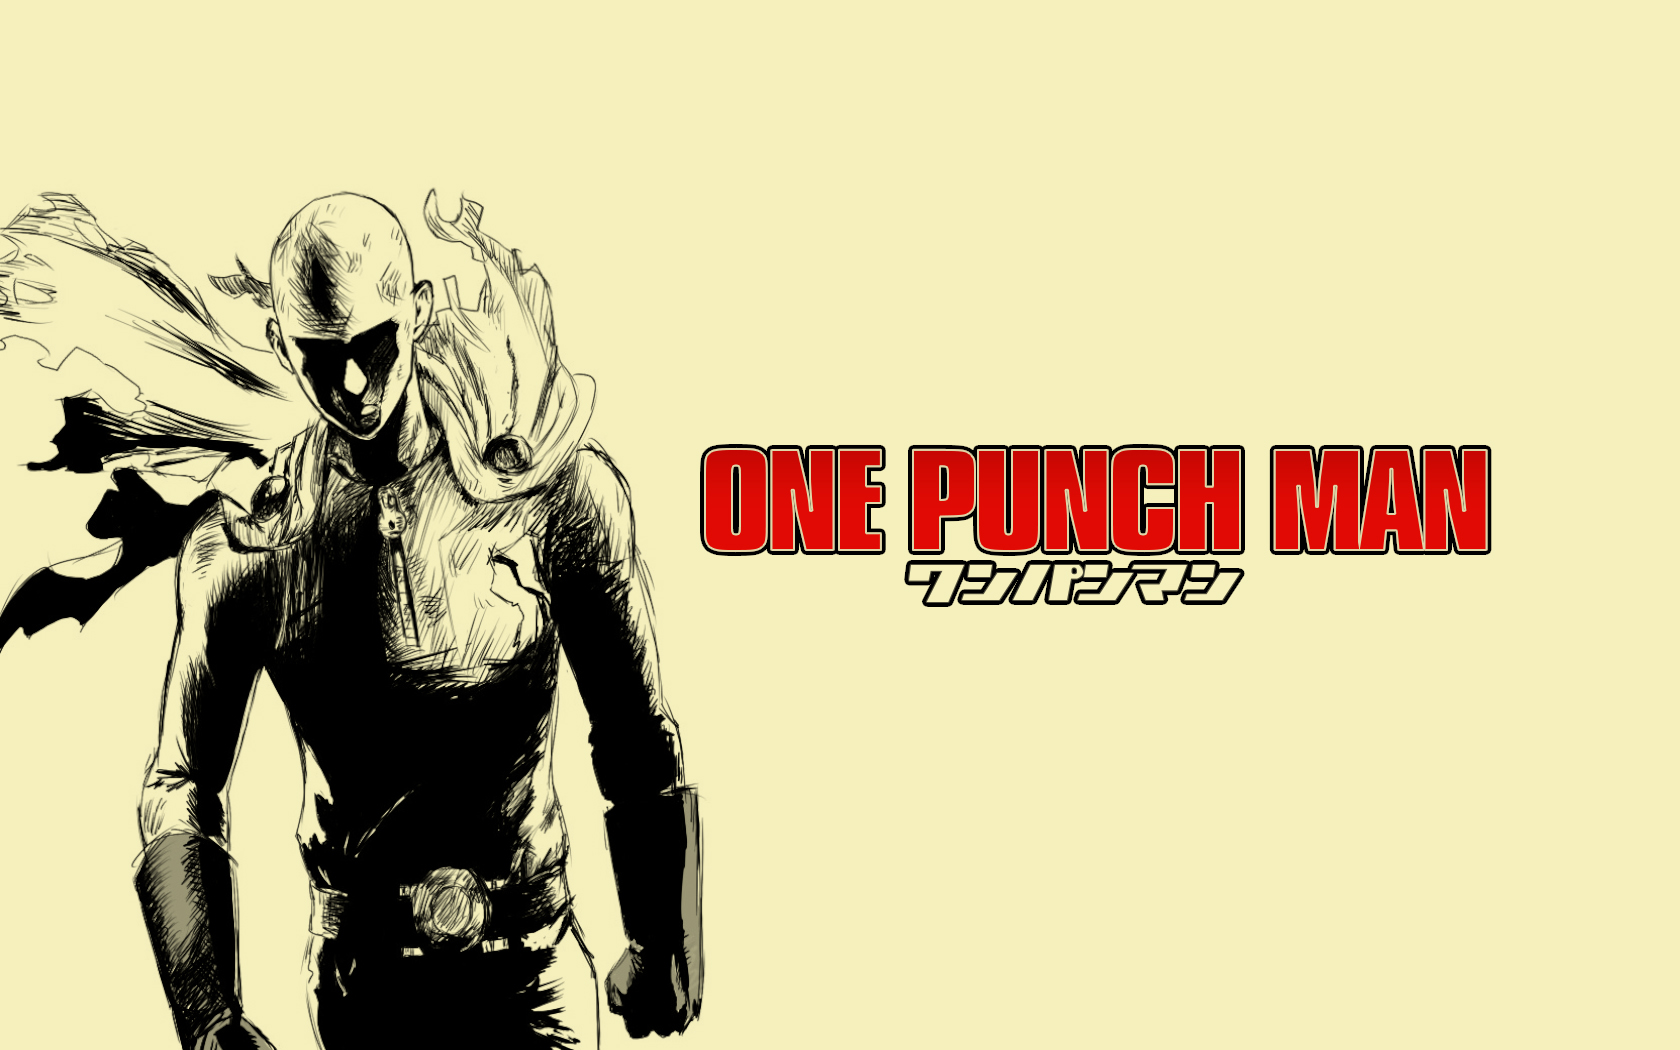 One Punch Man - Wallpaper 1920x1080 HD (Saitama) by TheQueenOtaku on  DeviantArt